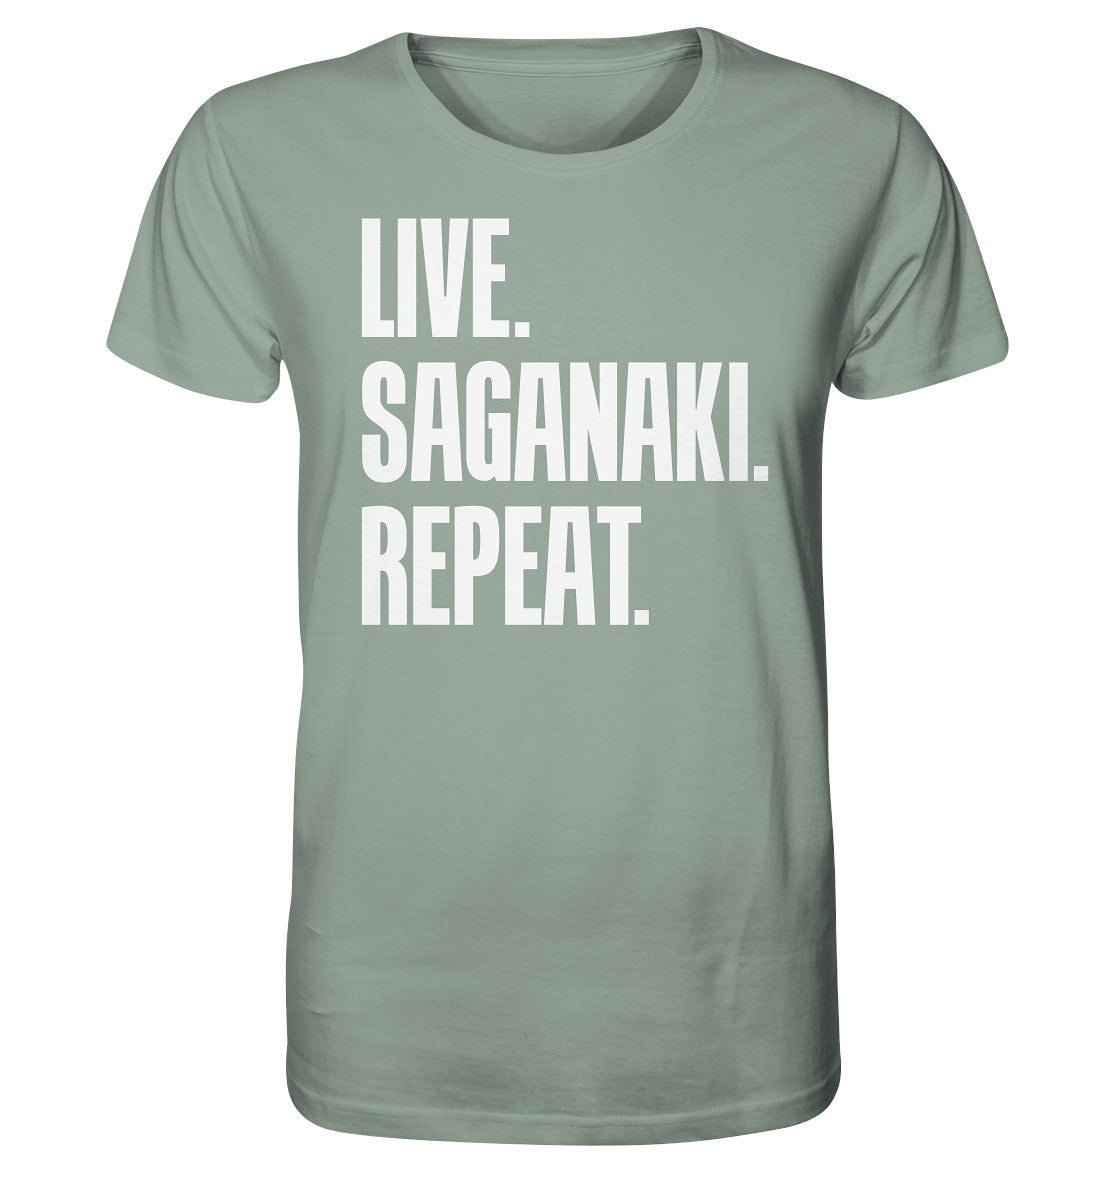 LIVE. SAGANAKI. REPEAT. - Organic Shirt